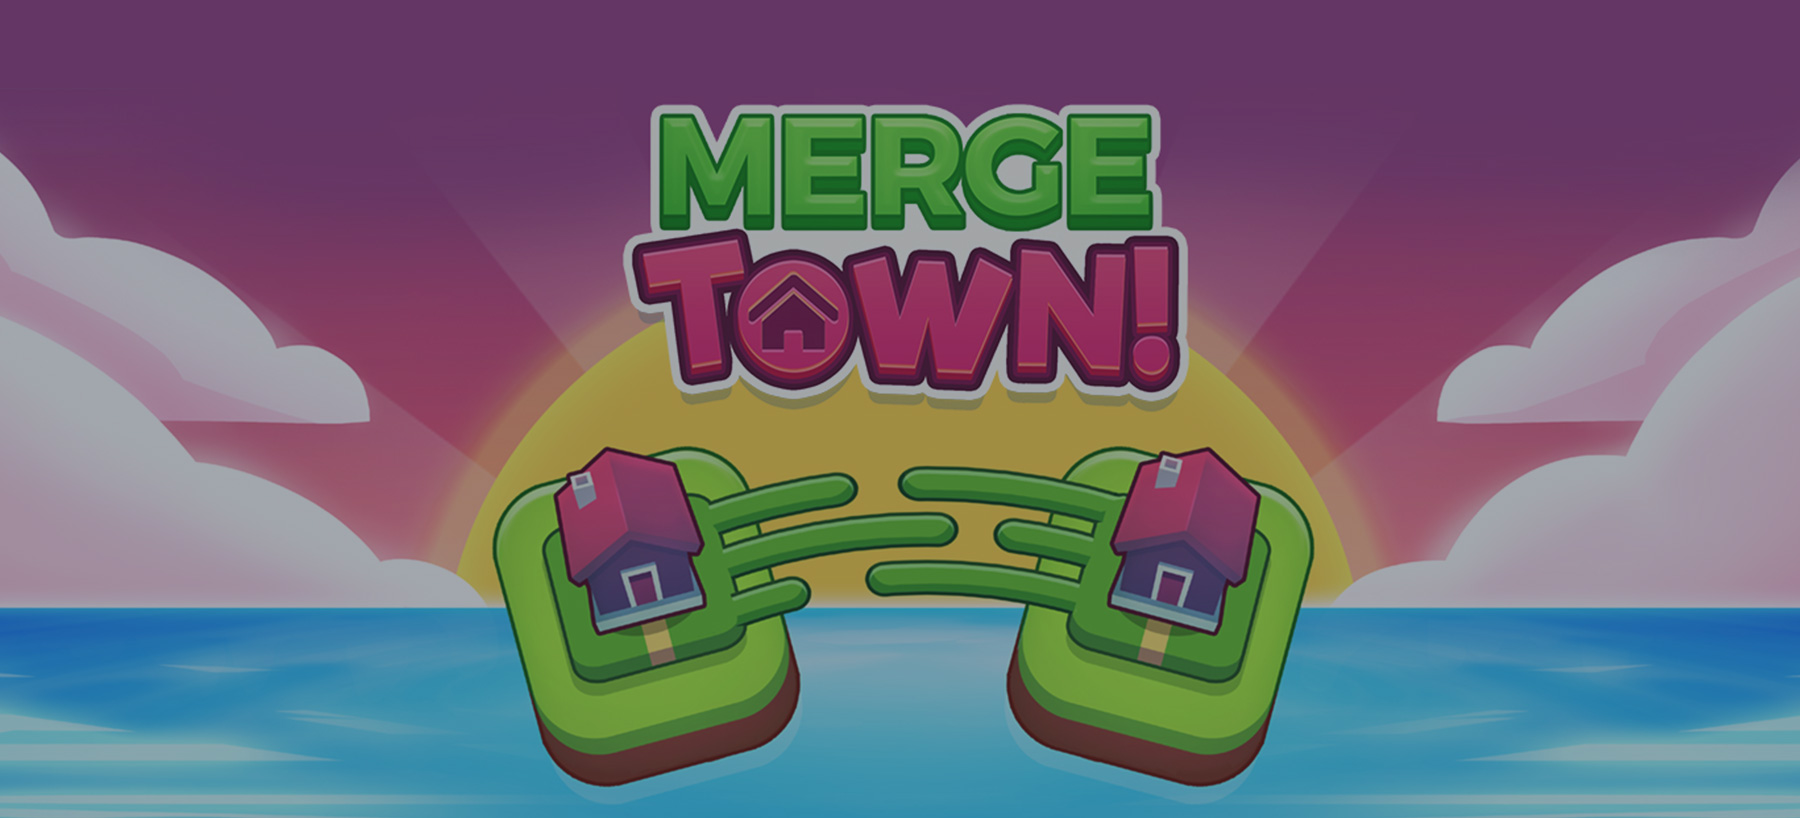 Merge Town! Hero Image